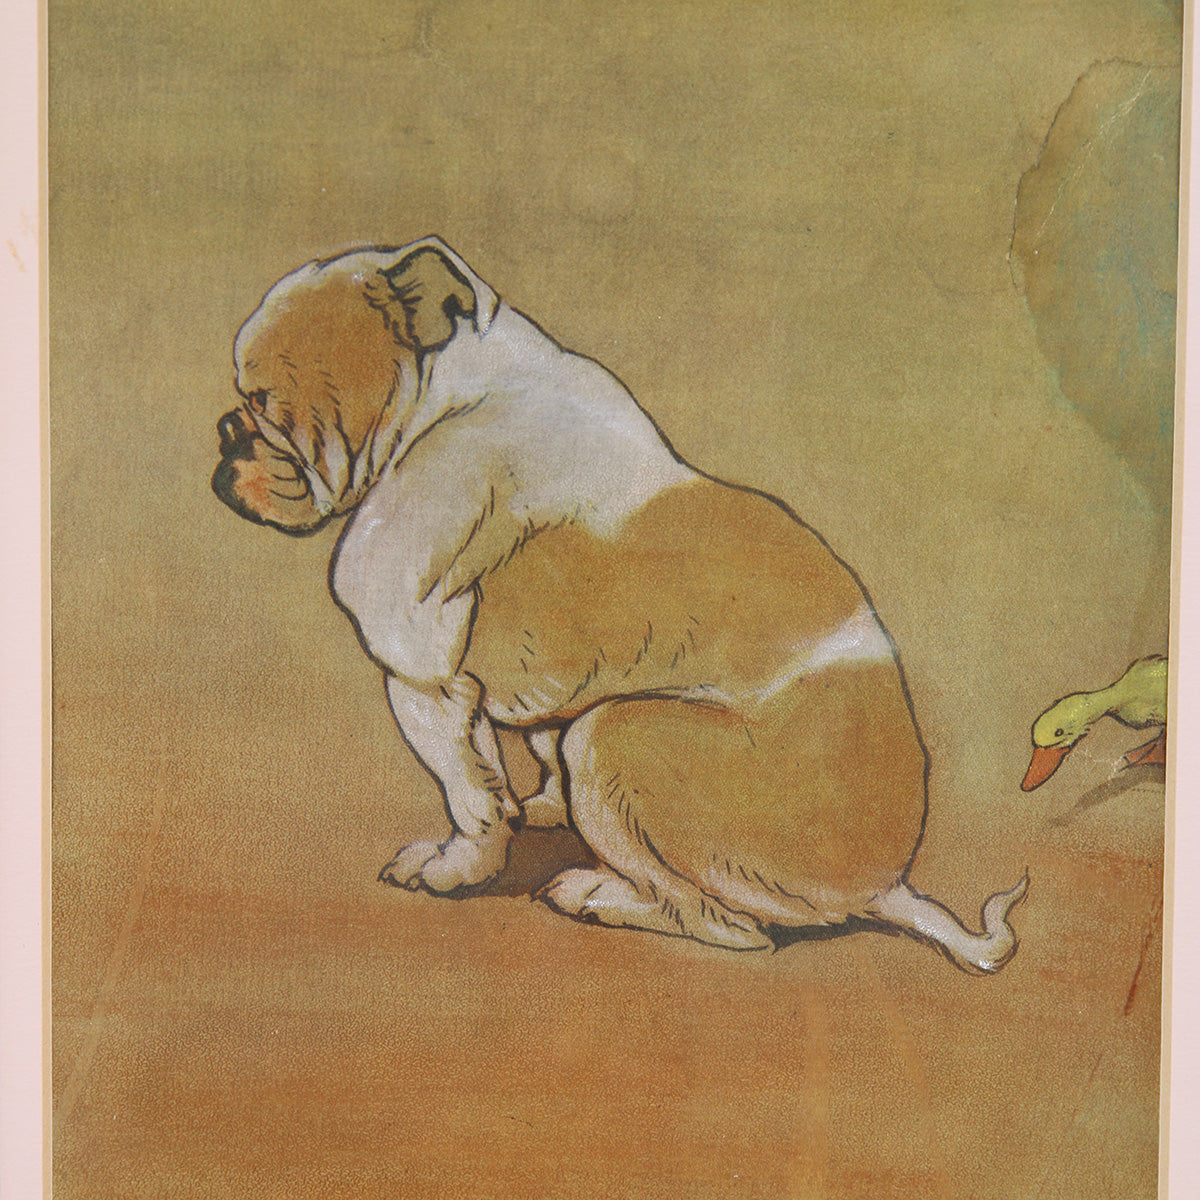 Is It a Worm? Bulldog Print, c.1930s - SOLD